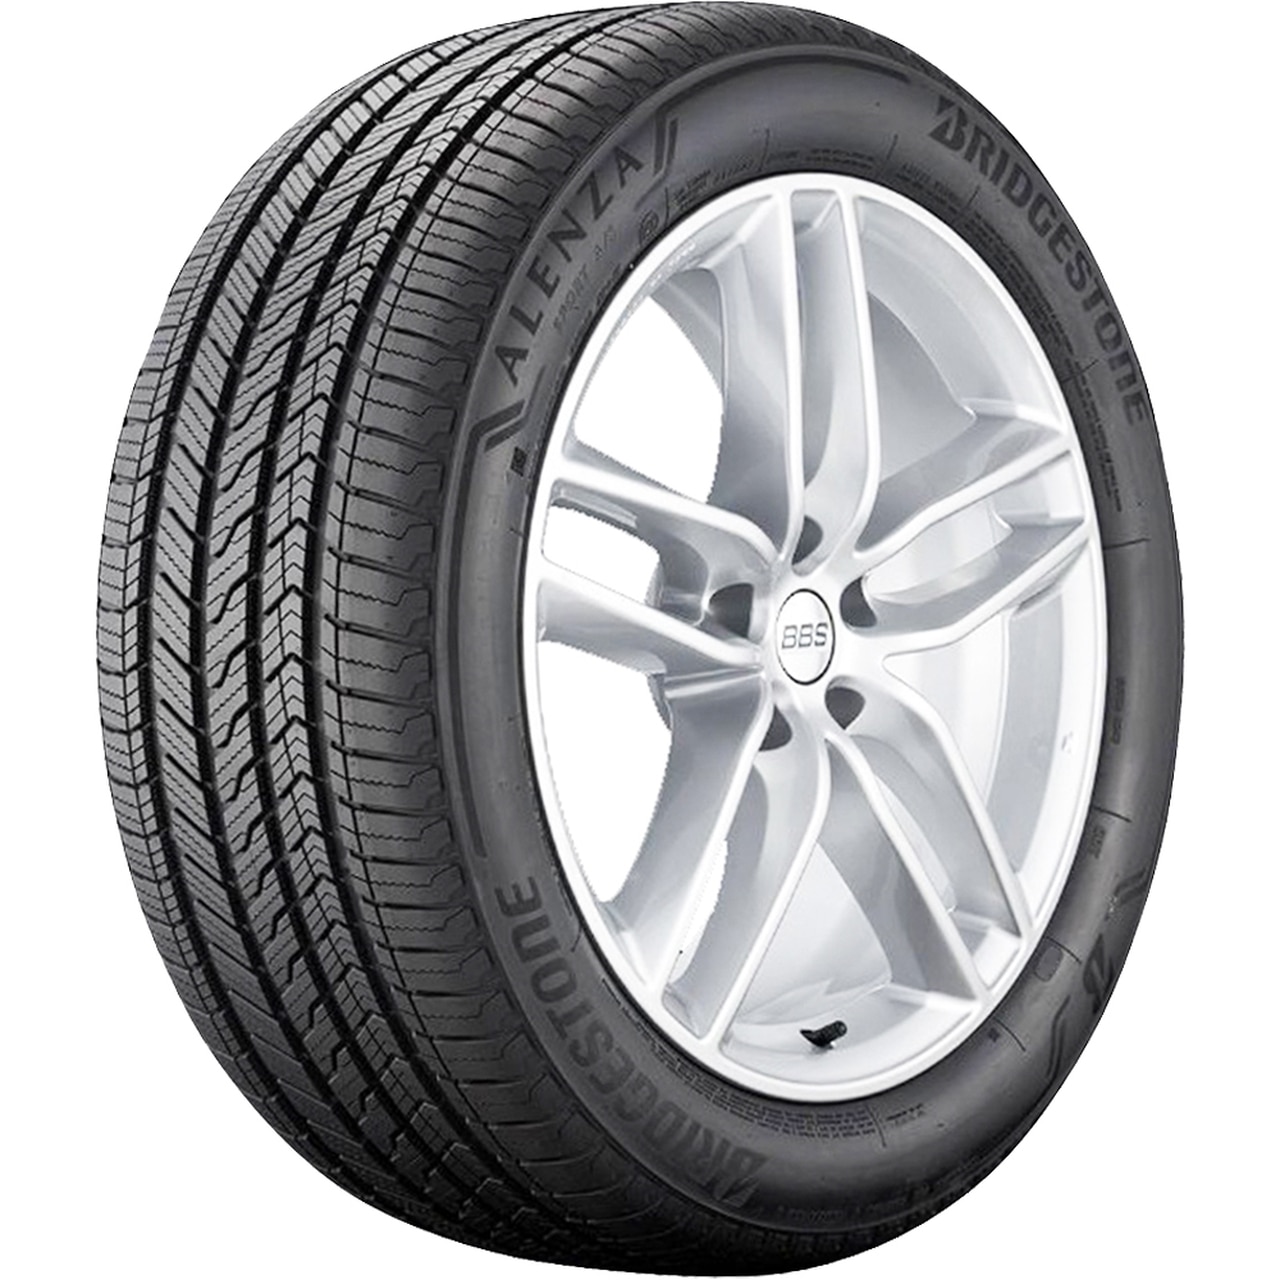 Gomme Nuove Bridgestone 275/55 R19 111H ALENZA SPORT A/S Runflat pneumatici nuovi Estivo